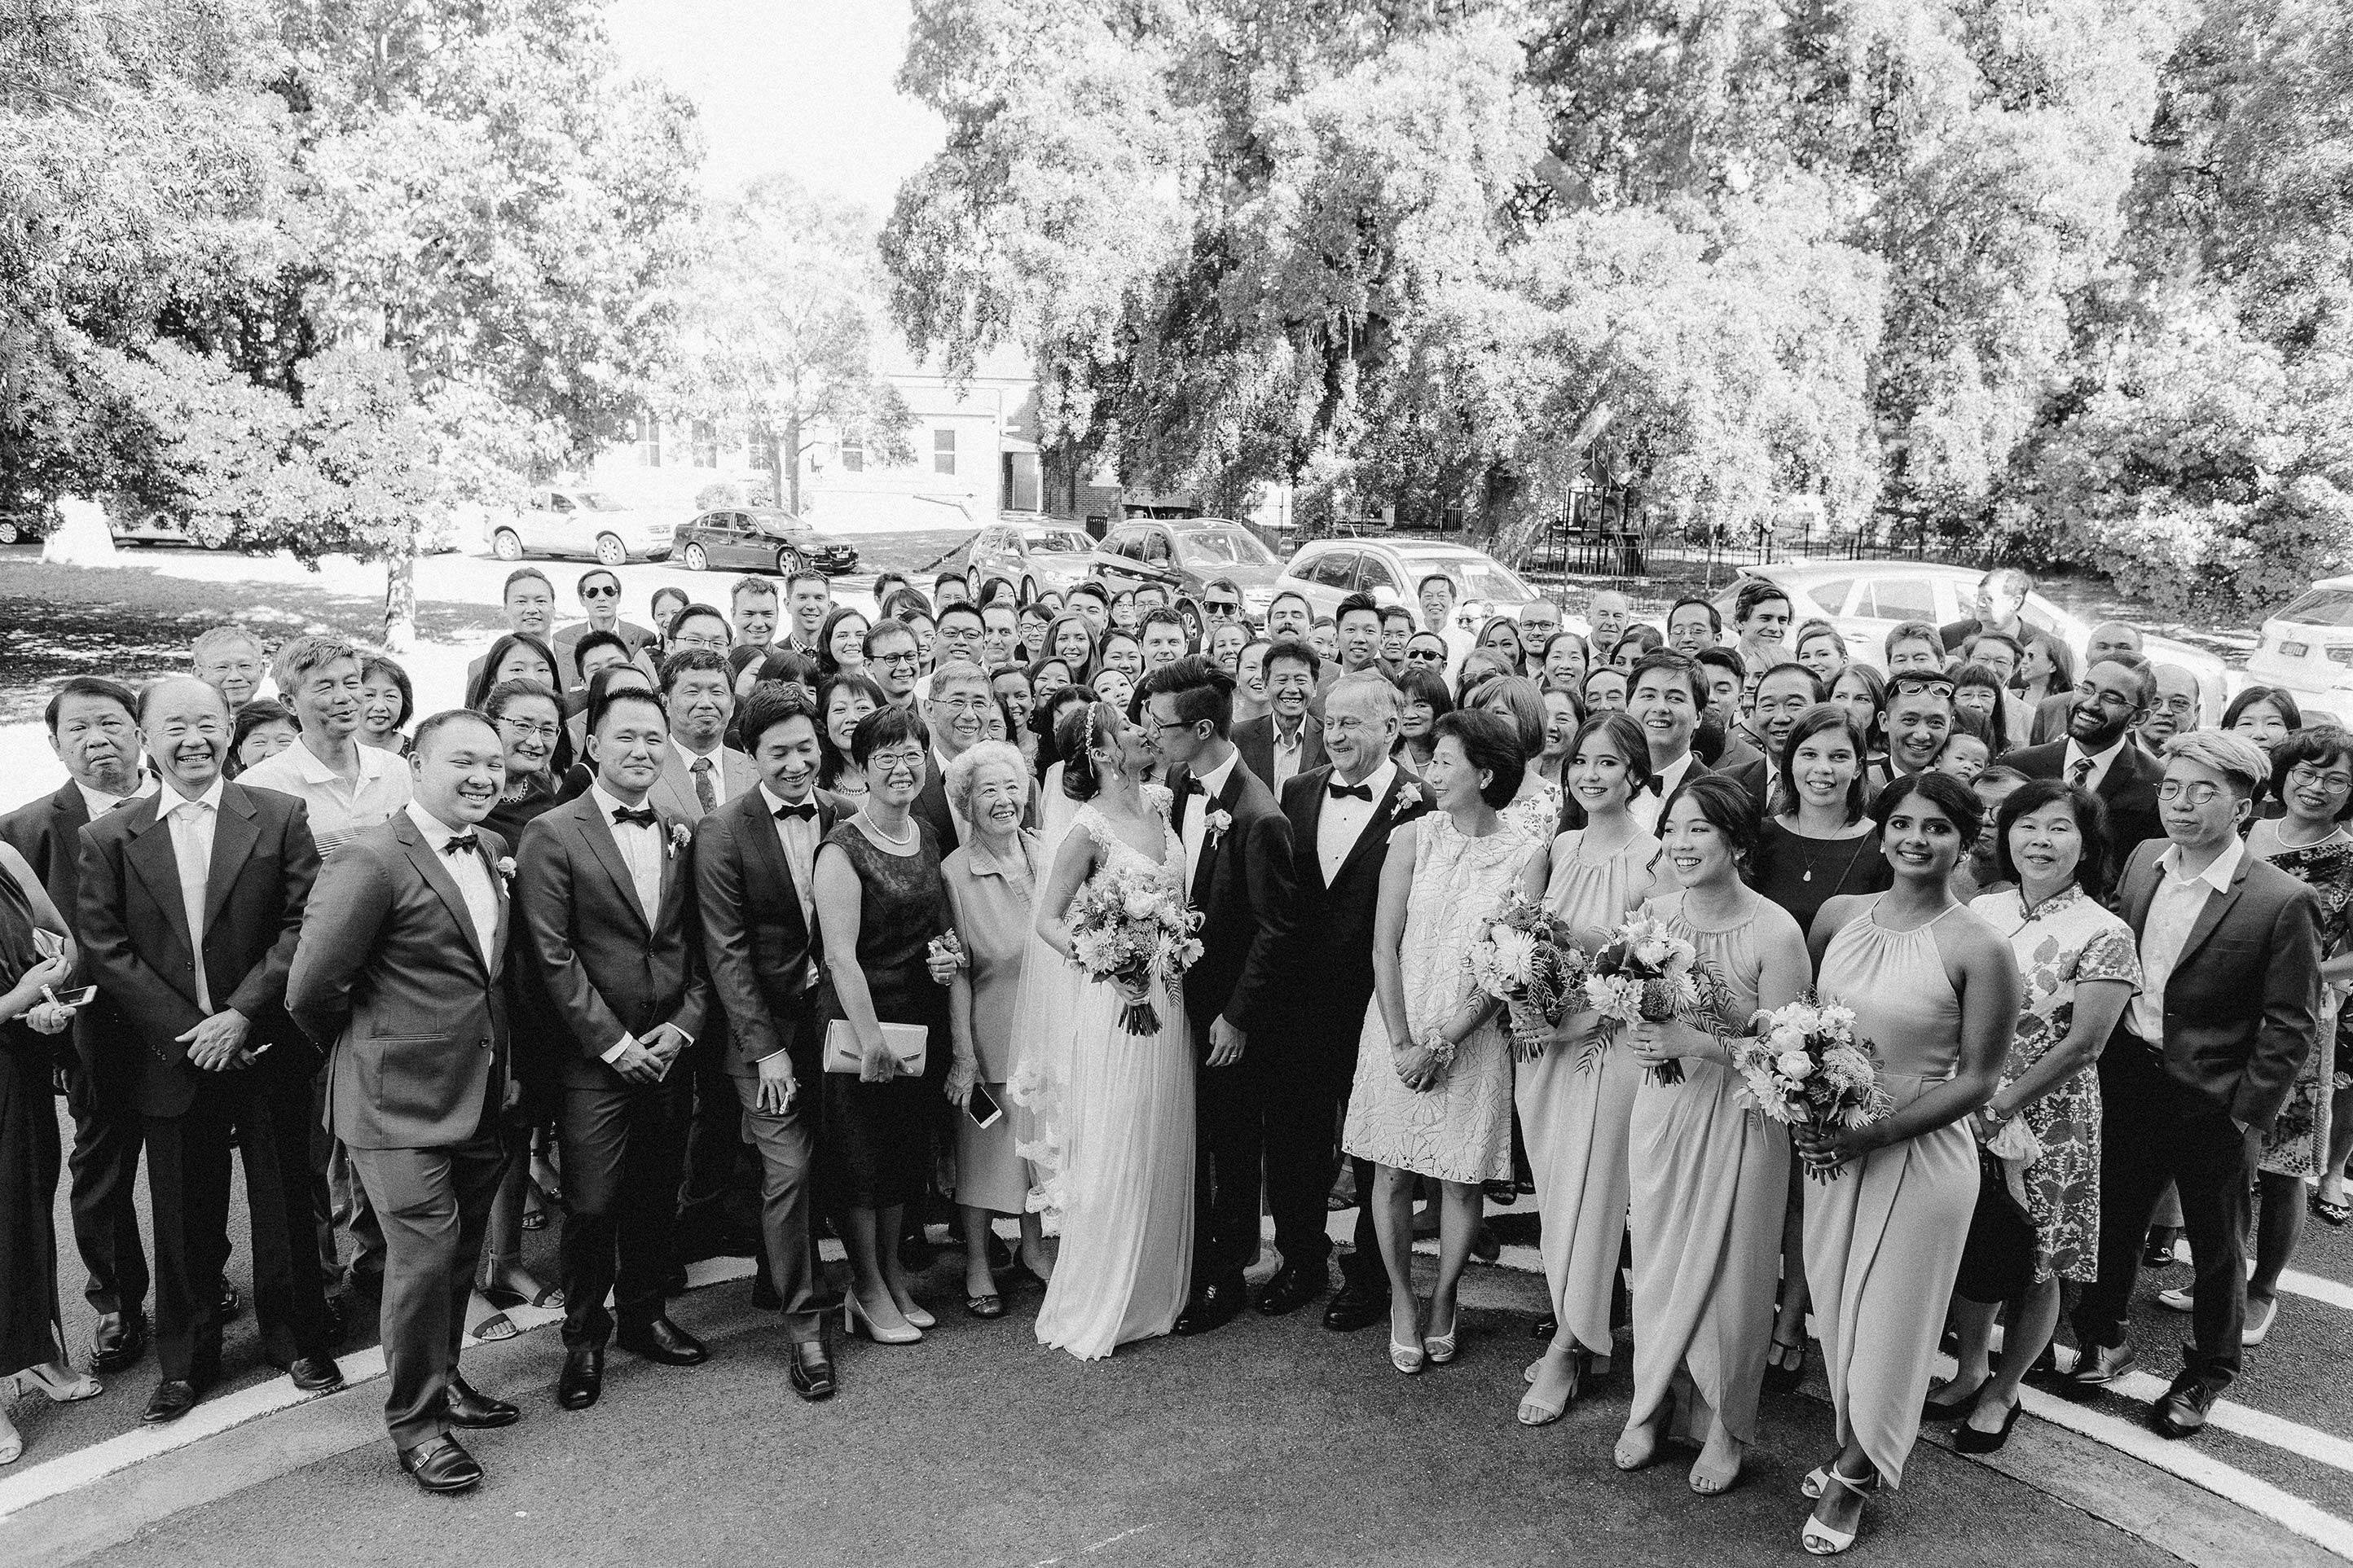 Melbourne-caufield-north-wedding-church-ceremony-group-photo